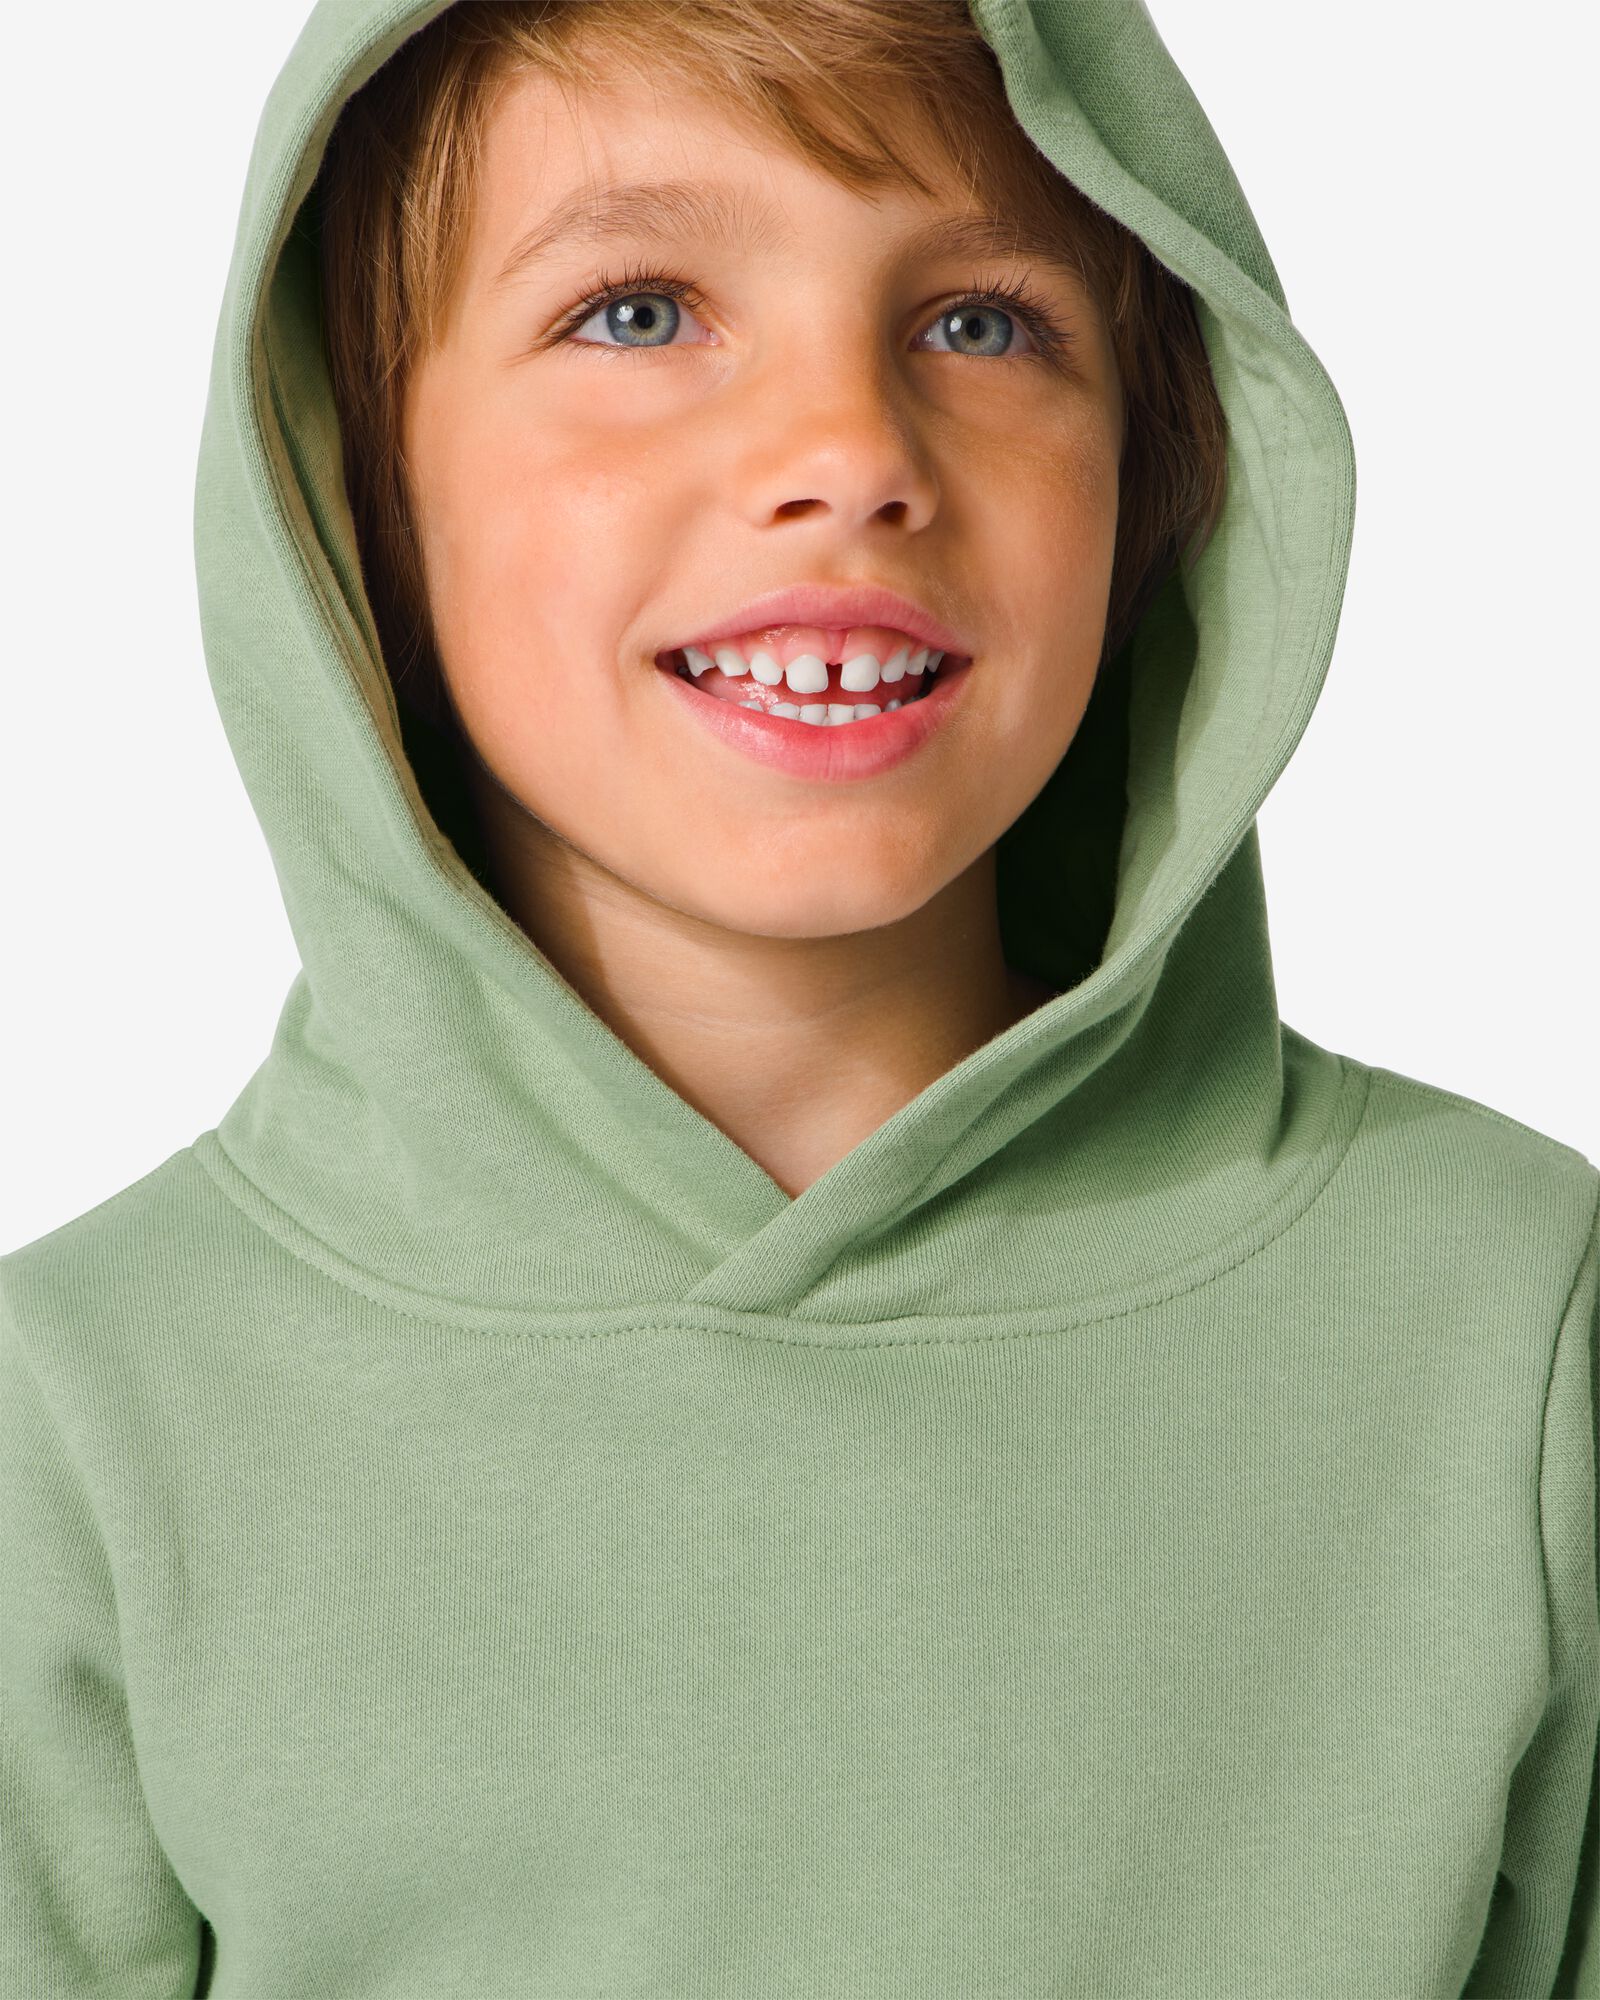 kinder hoodie met kangeroezak groen 86/92 - 30769427 - HEMA